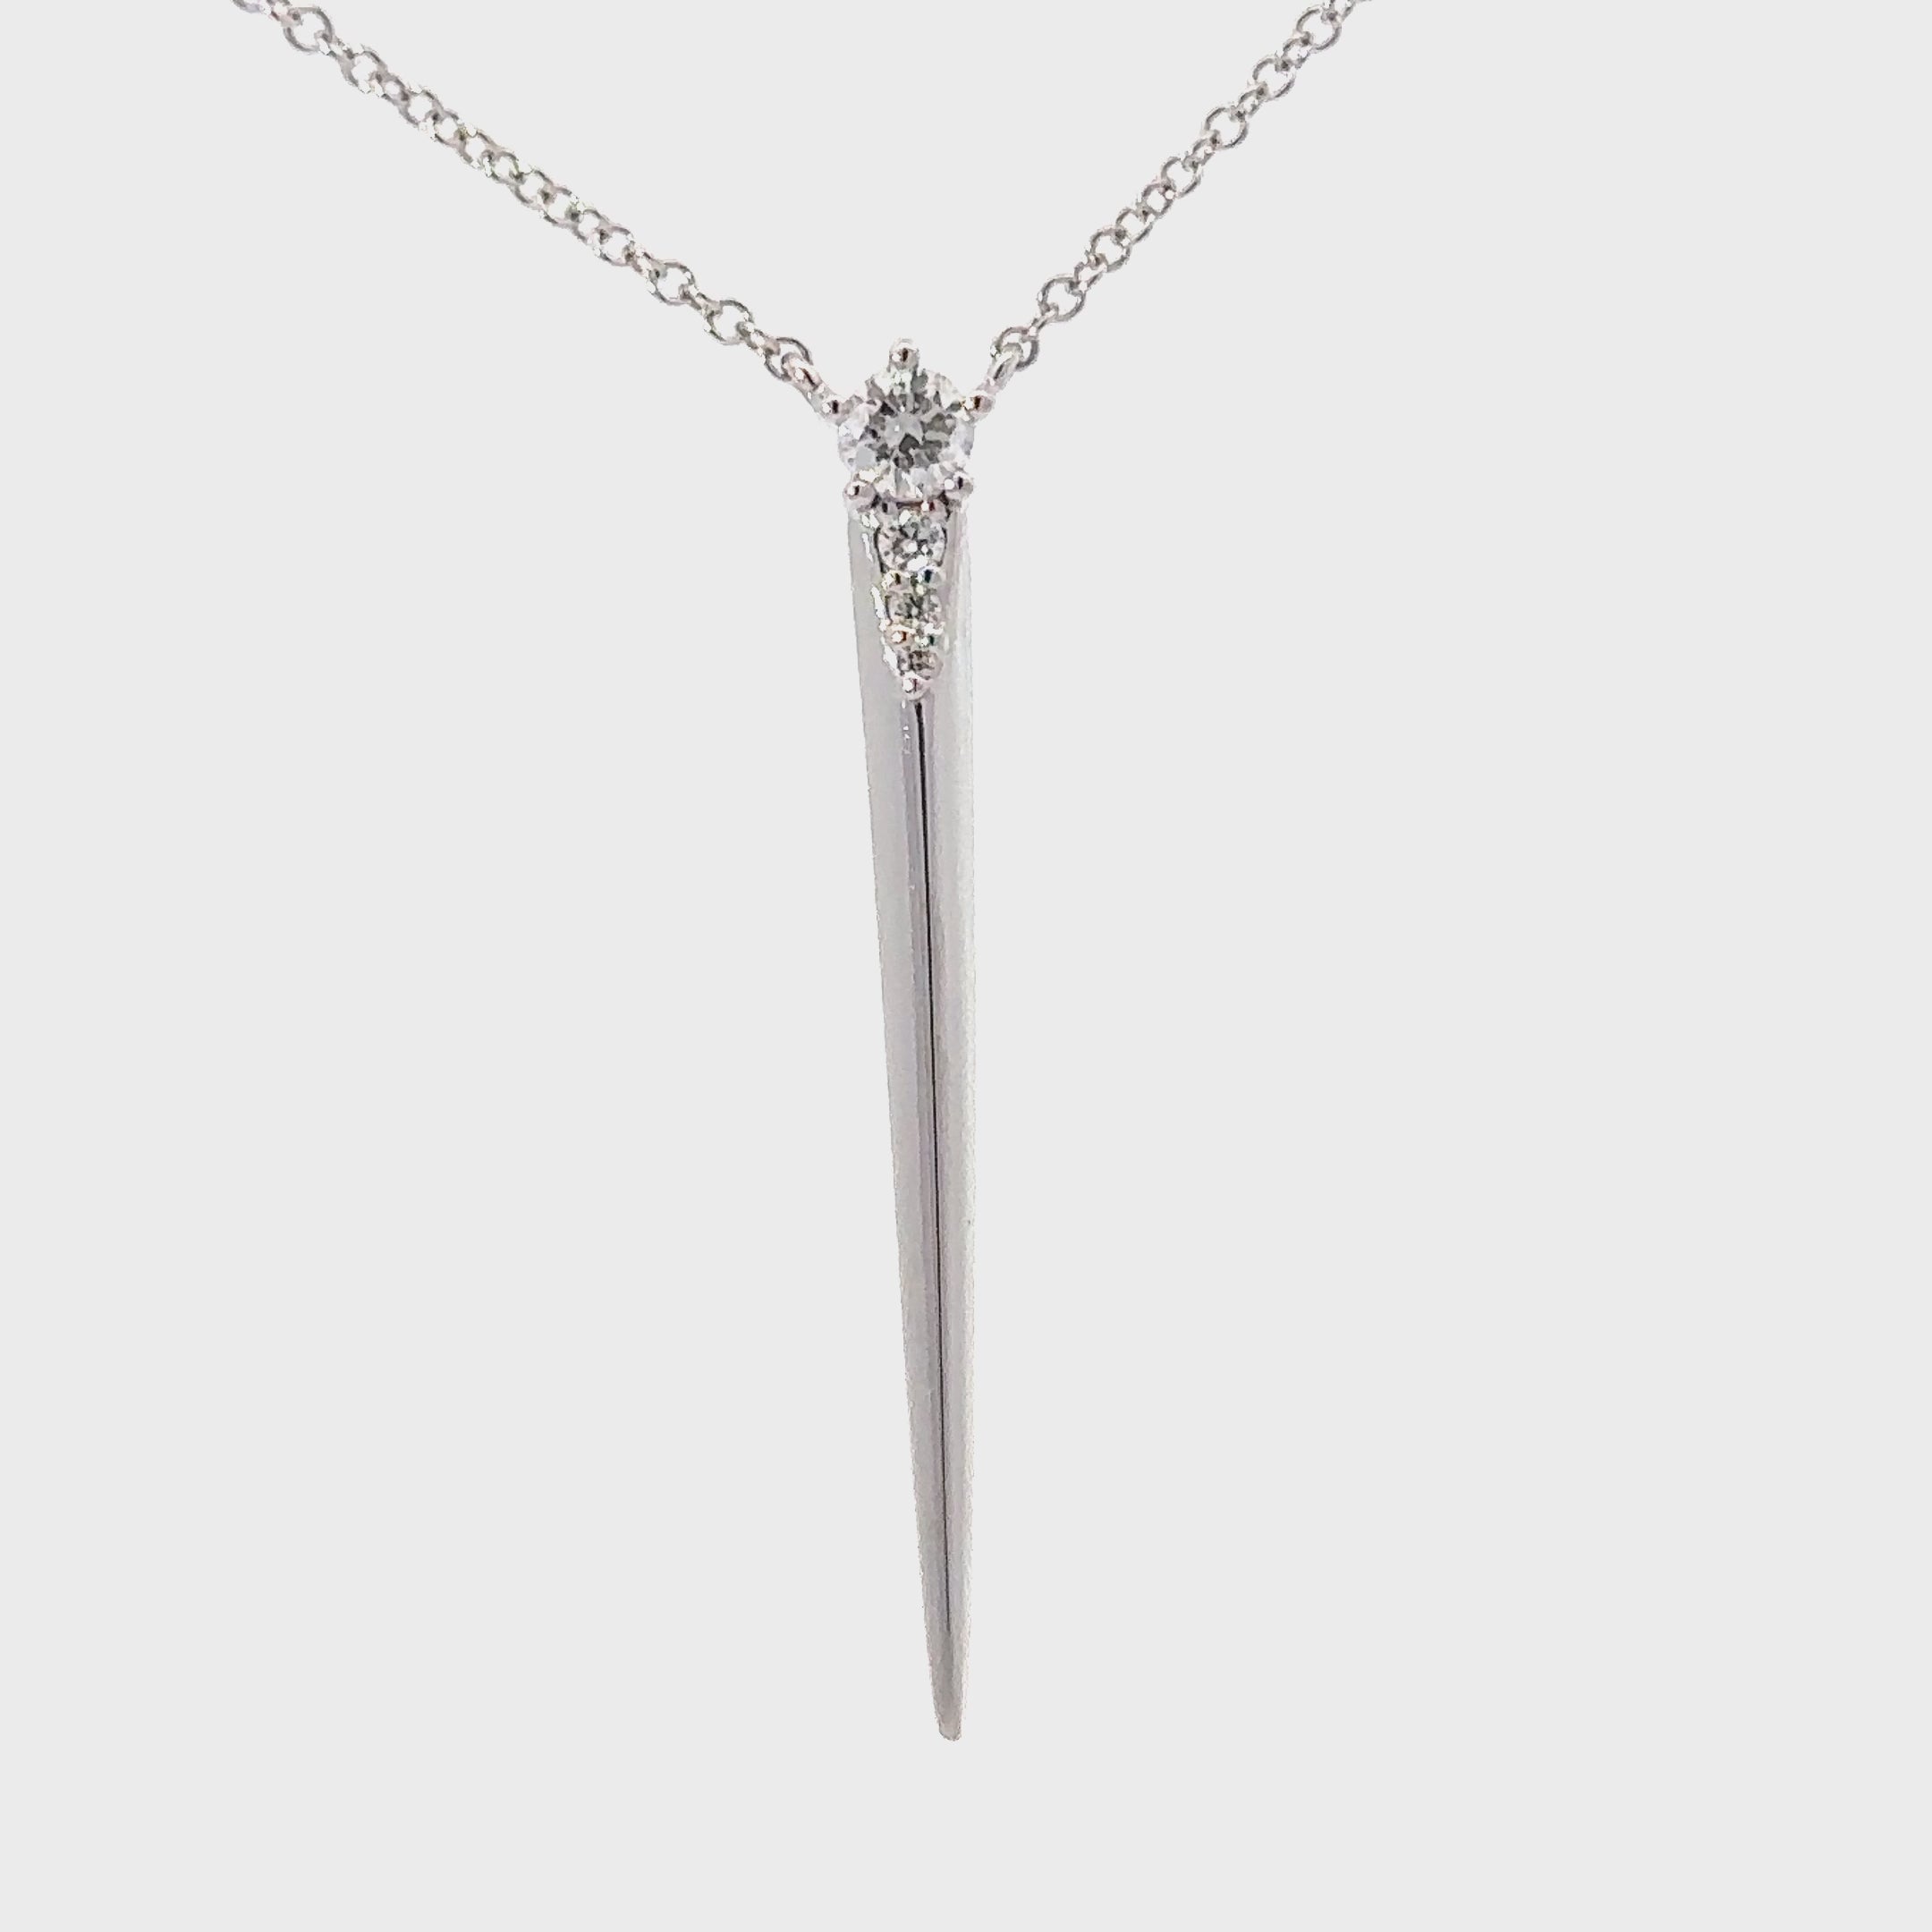 Bassali of New York 14kw diamond pedulum necklace